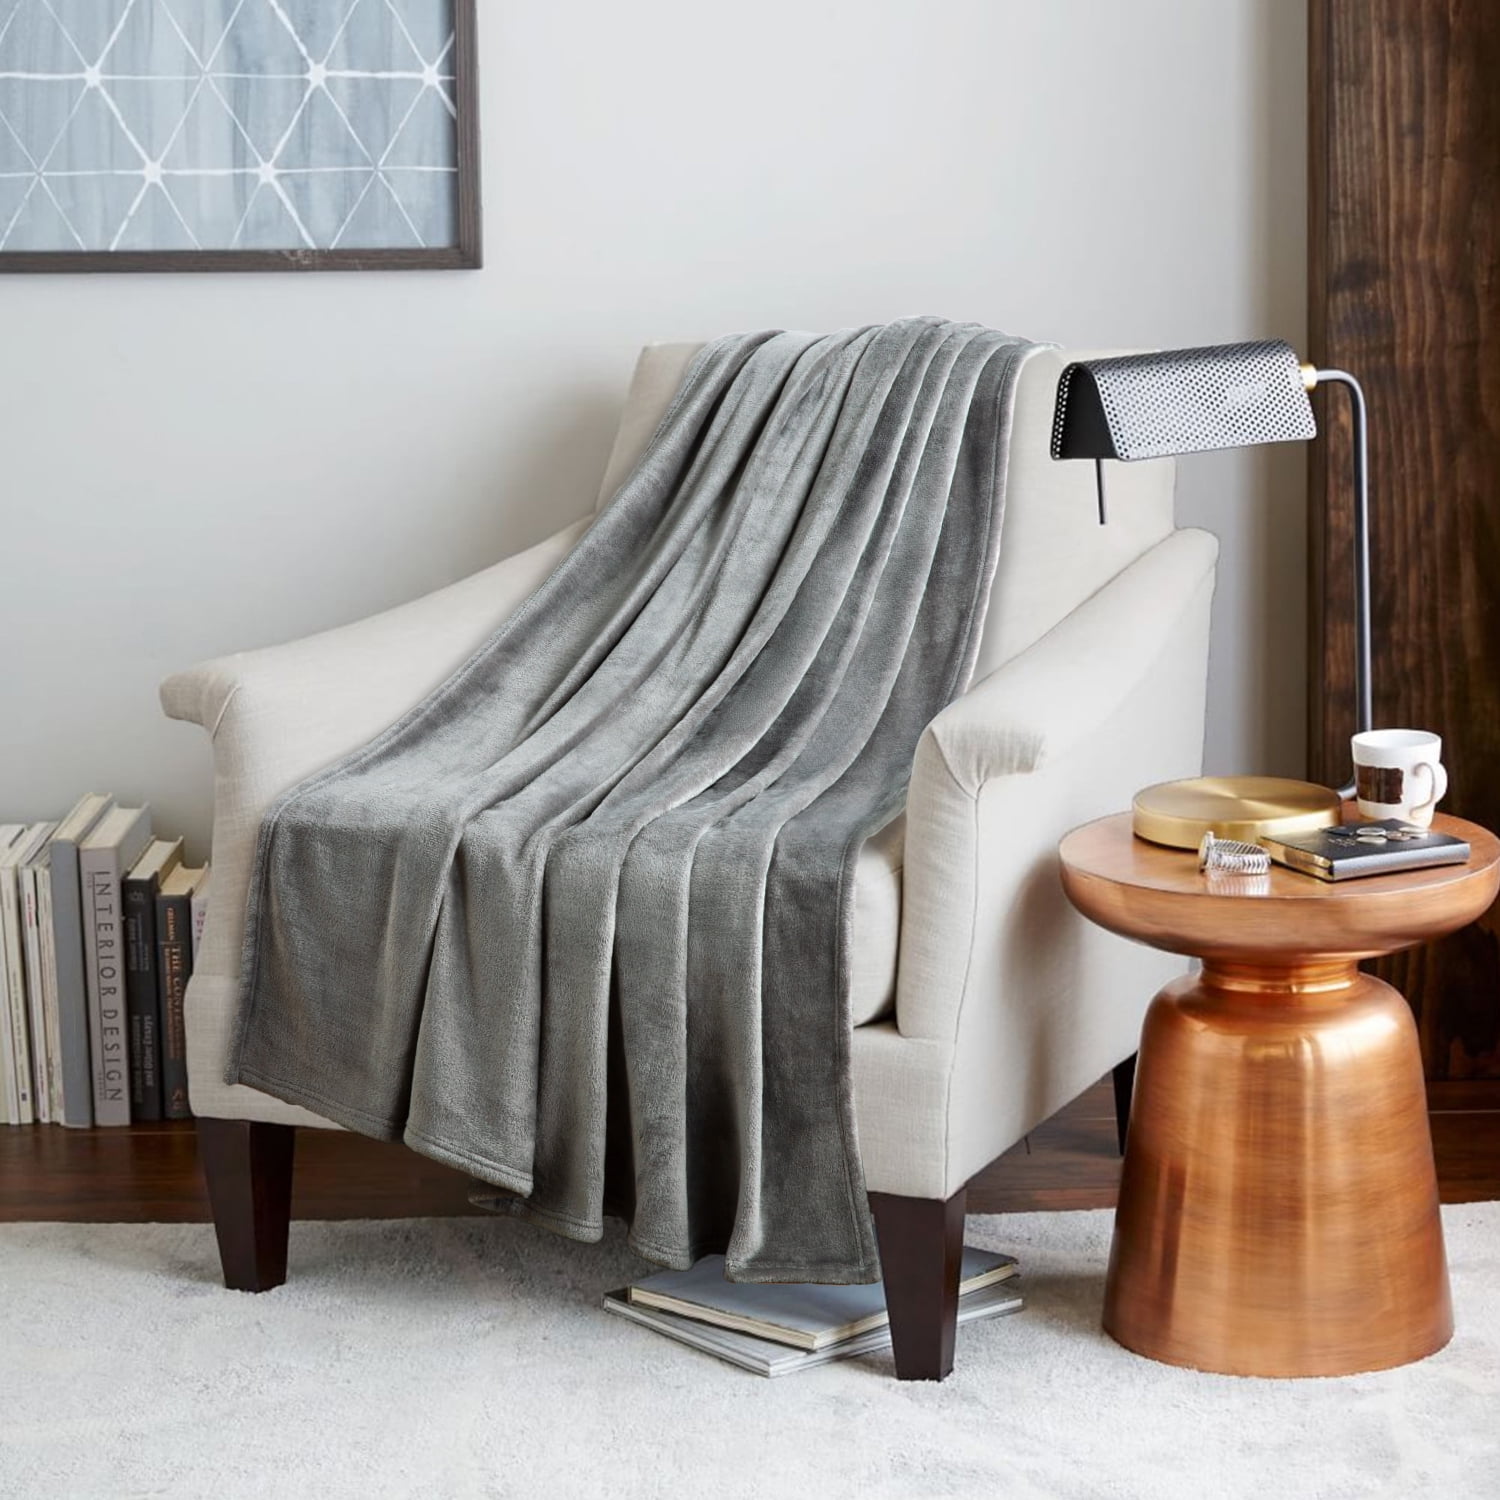 Ultra Soft Cozy Flannel Fleece Microfibre Travel Throw Bed Sofa Throw Blanket